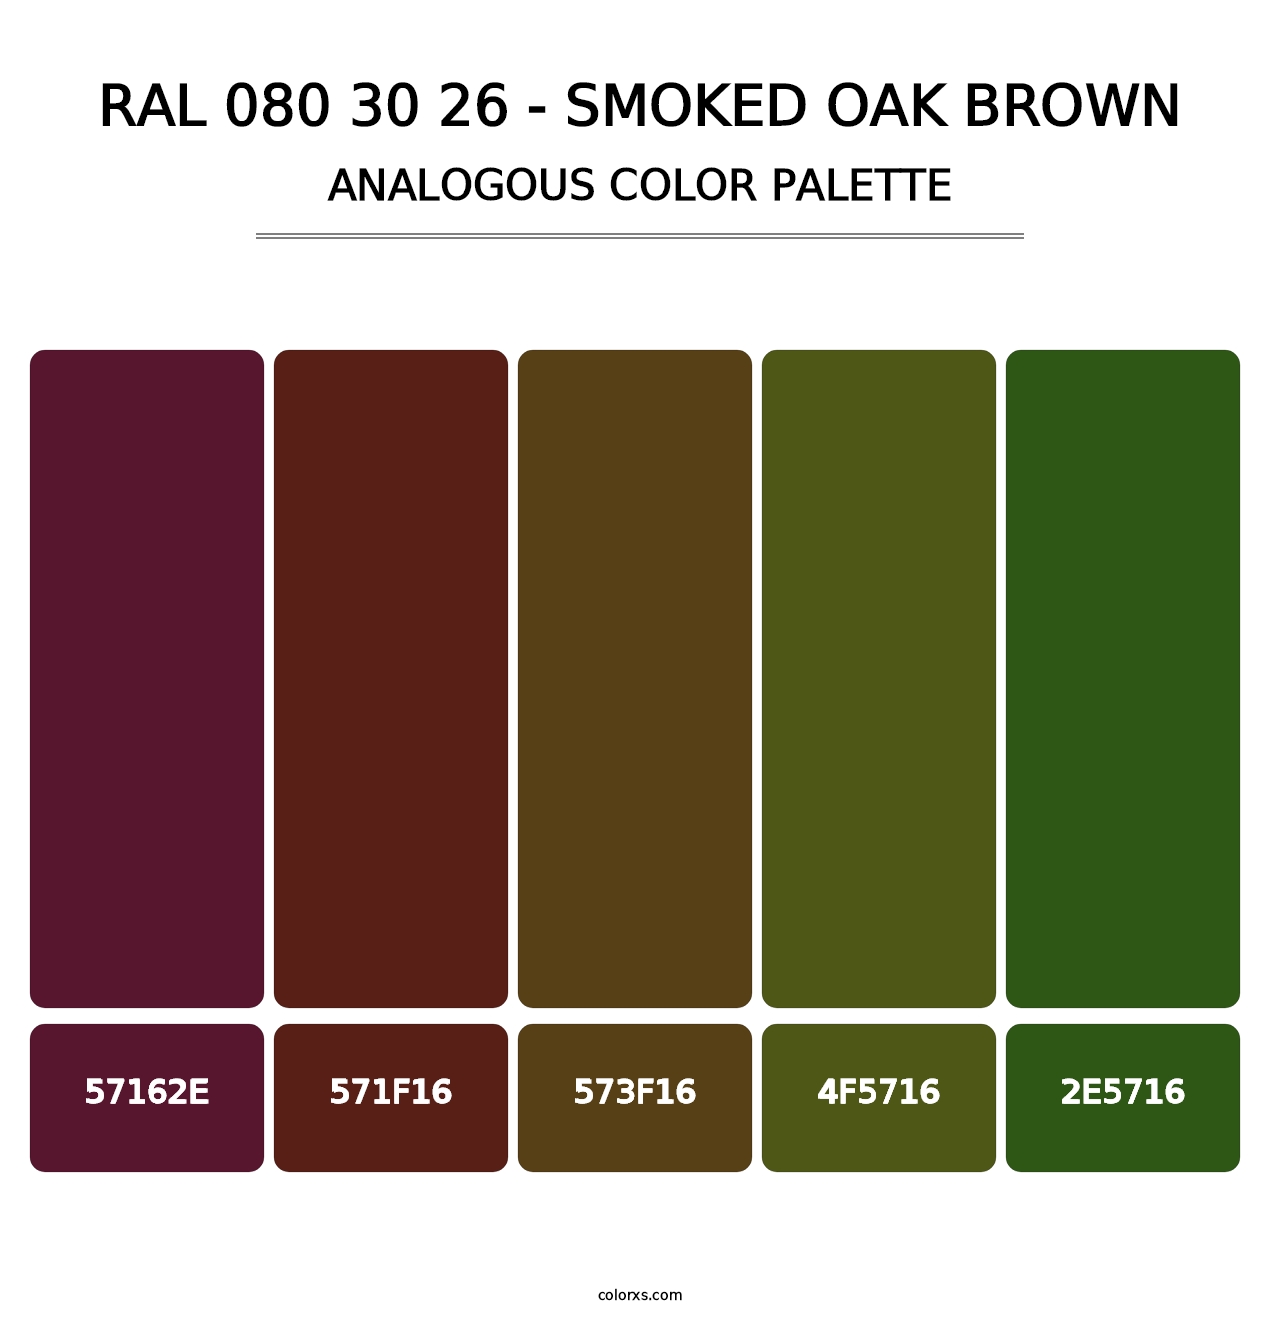 RAL 080 30 26 - Smoked Oak Brown - Analogous Color Palette